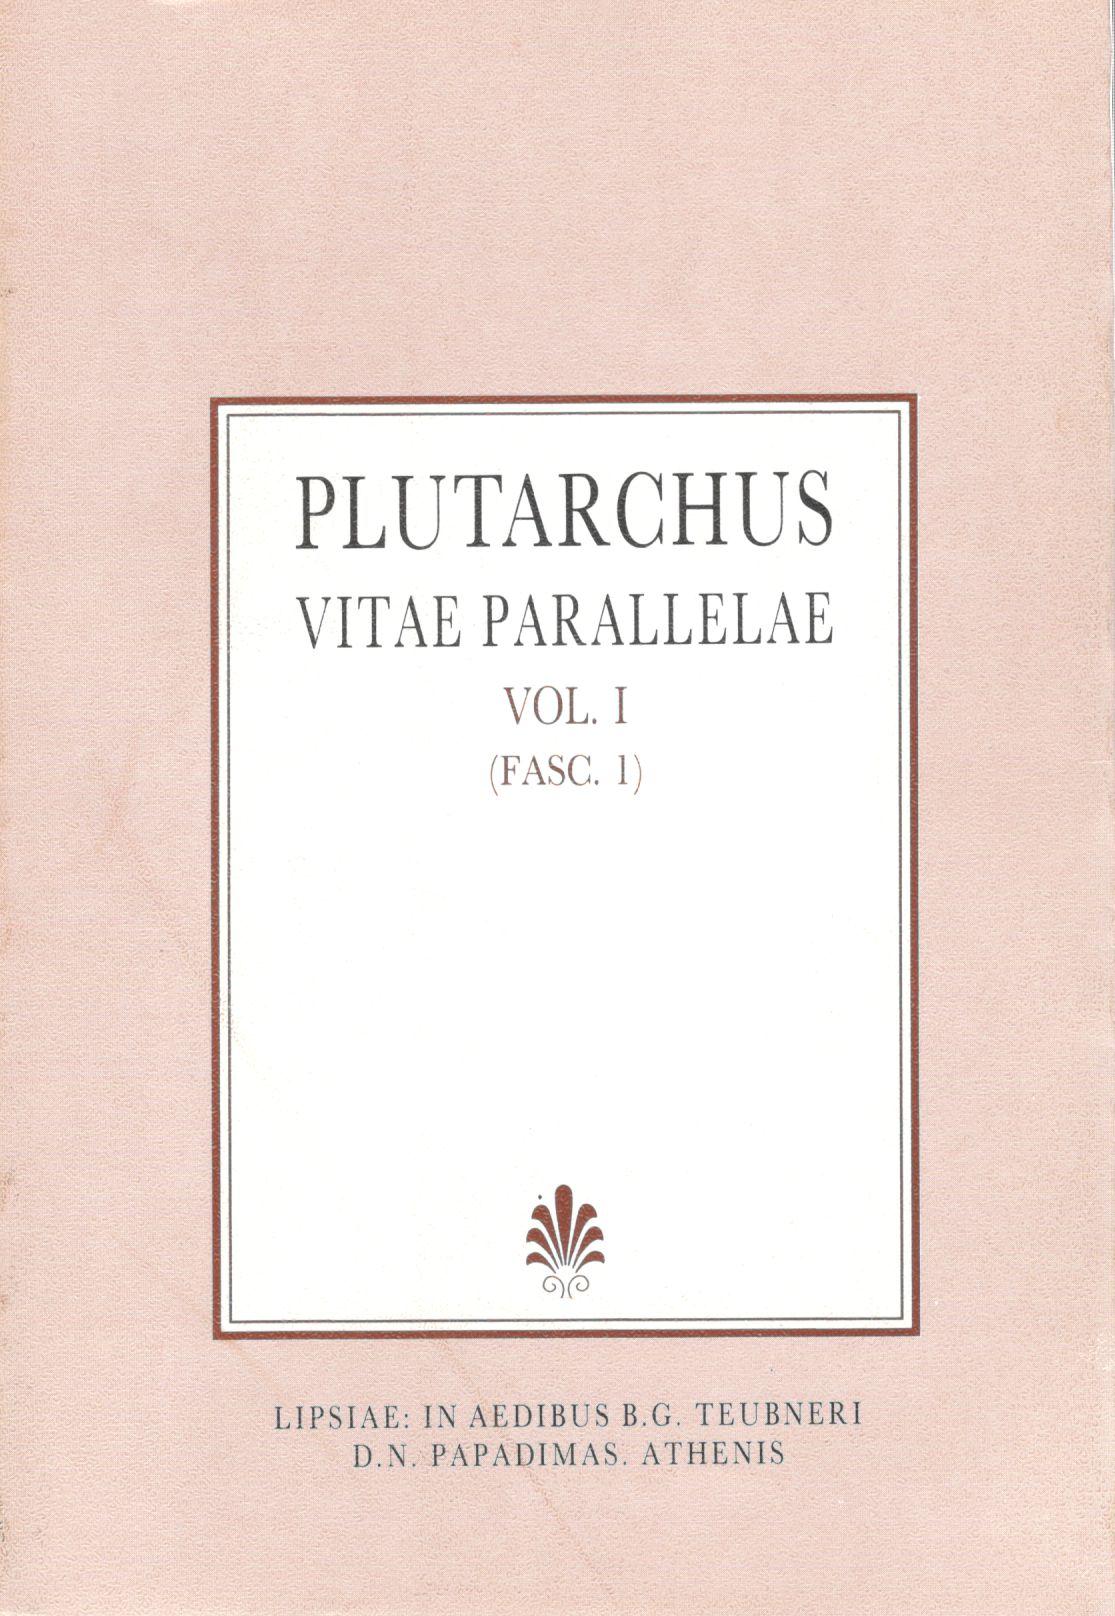 Plutarchi, Vitae Parallelae, Vol. I, (Fasc. 1), [Πλουτάρχου, Βίοι Παράλληλοι, τ. Α', (τεύχ. 1)]